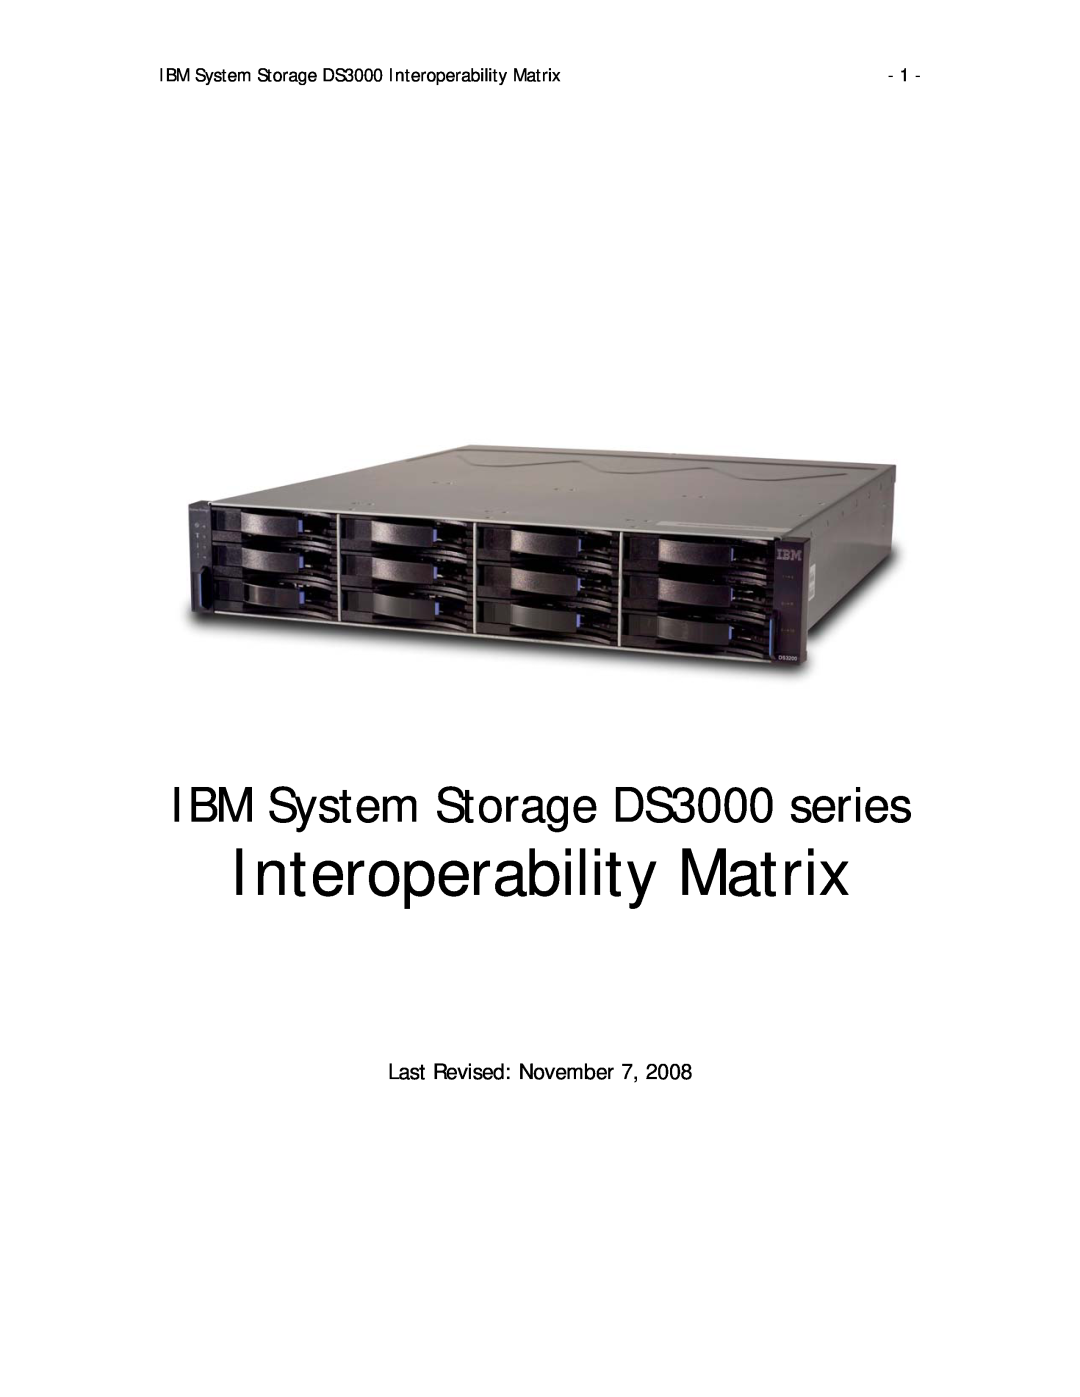 IBM DS3200, DS3000 Series, DS3300 manual Last Revised November, Interoperability Matrix, IBM System Storage DS3000 series 